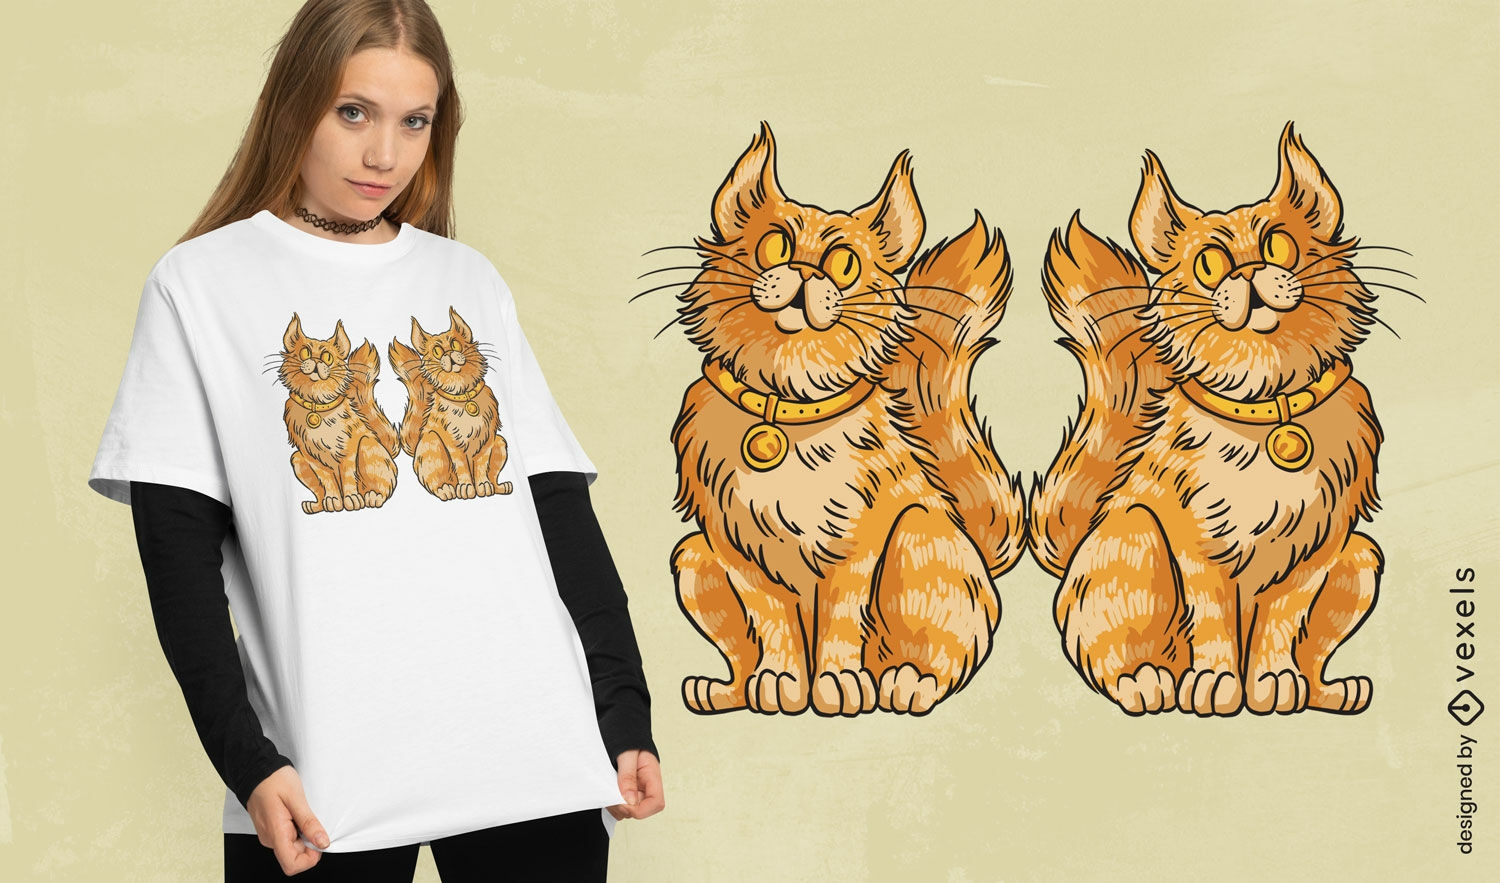 Mensurable mediodía Preciso Descarga Vector De Diseño De Camiseta De Animales De Gato Gemelo De Maine  Coon